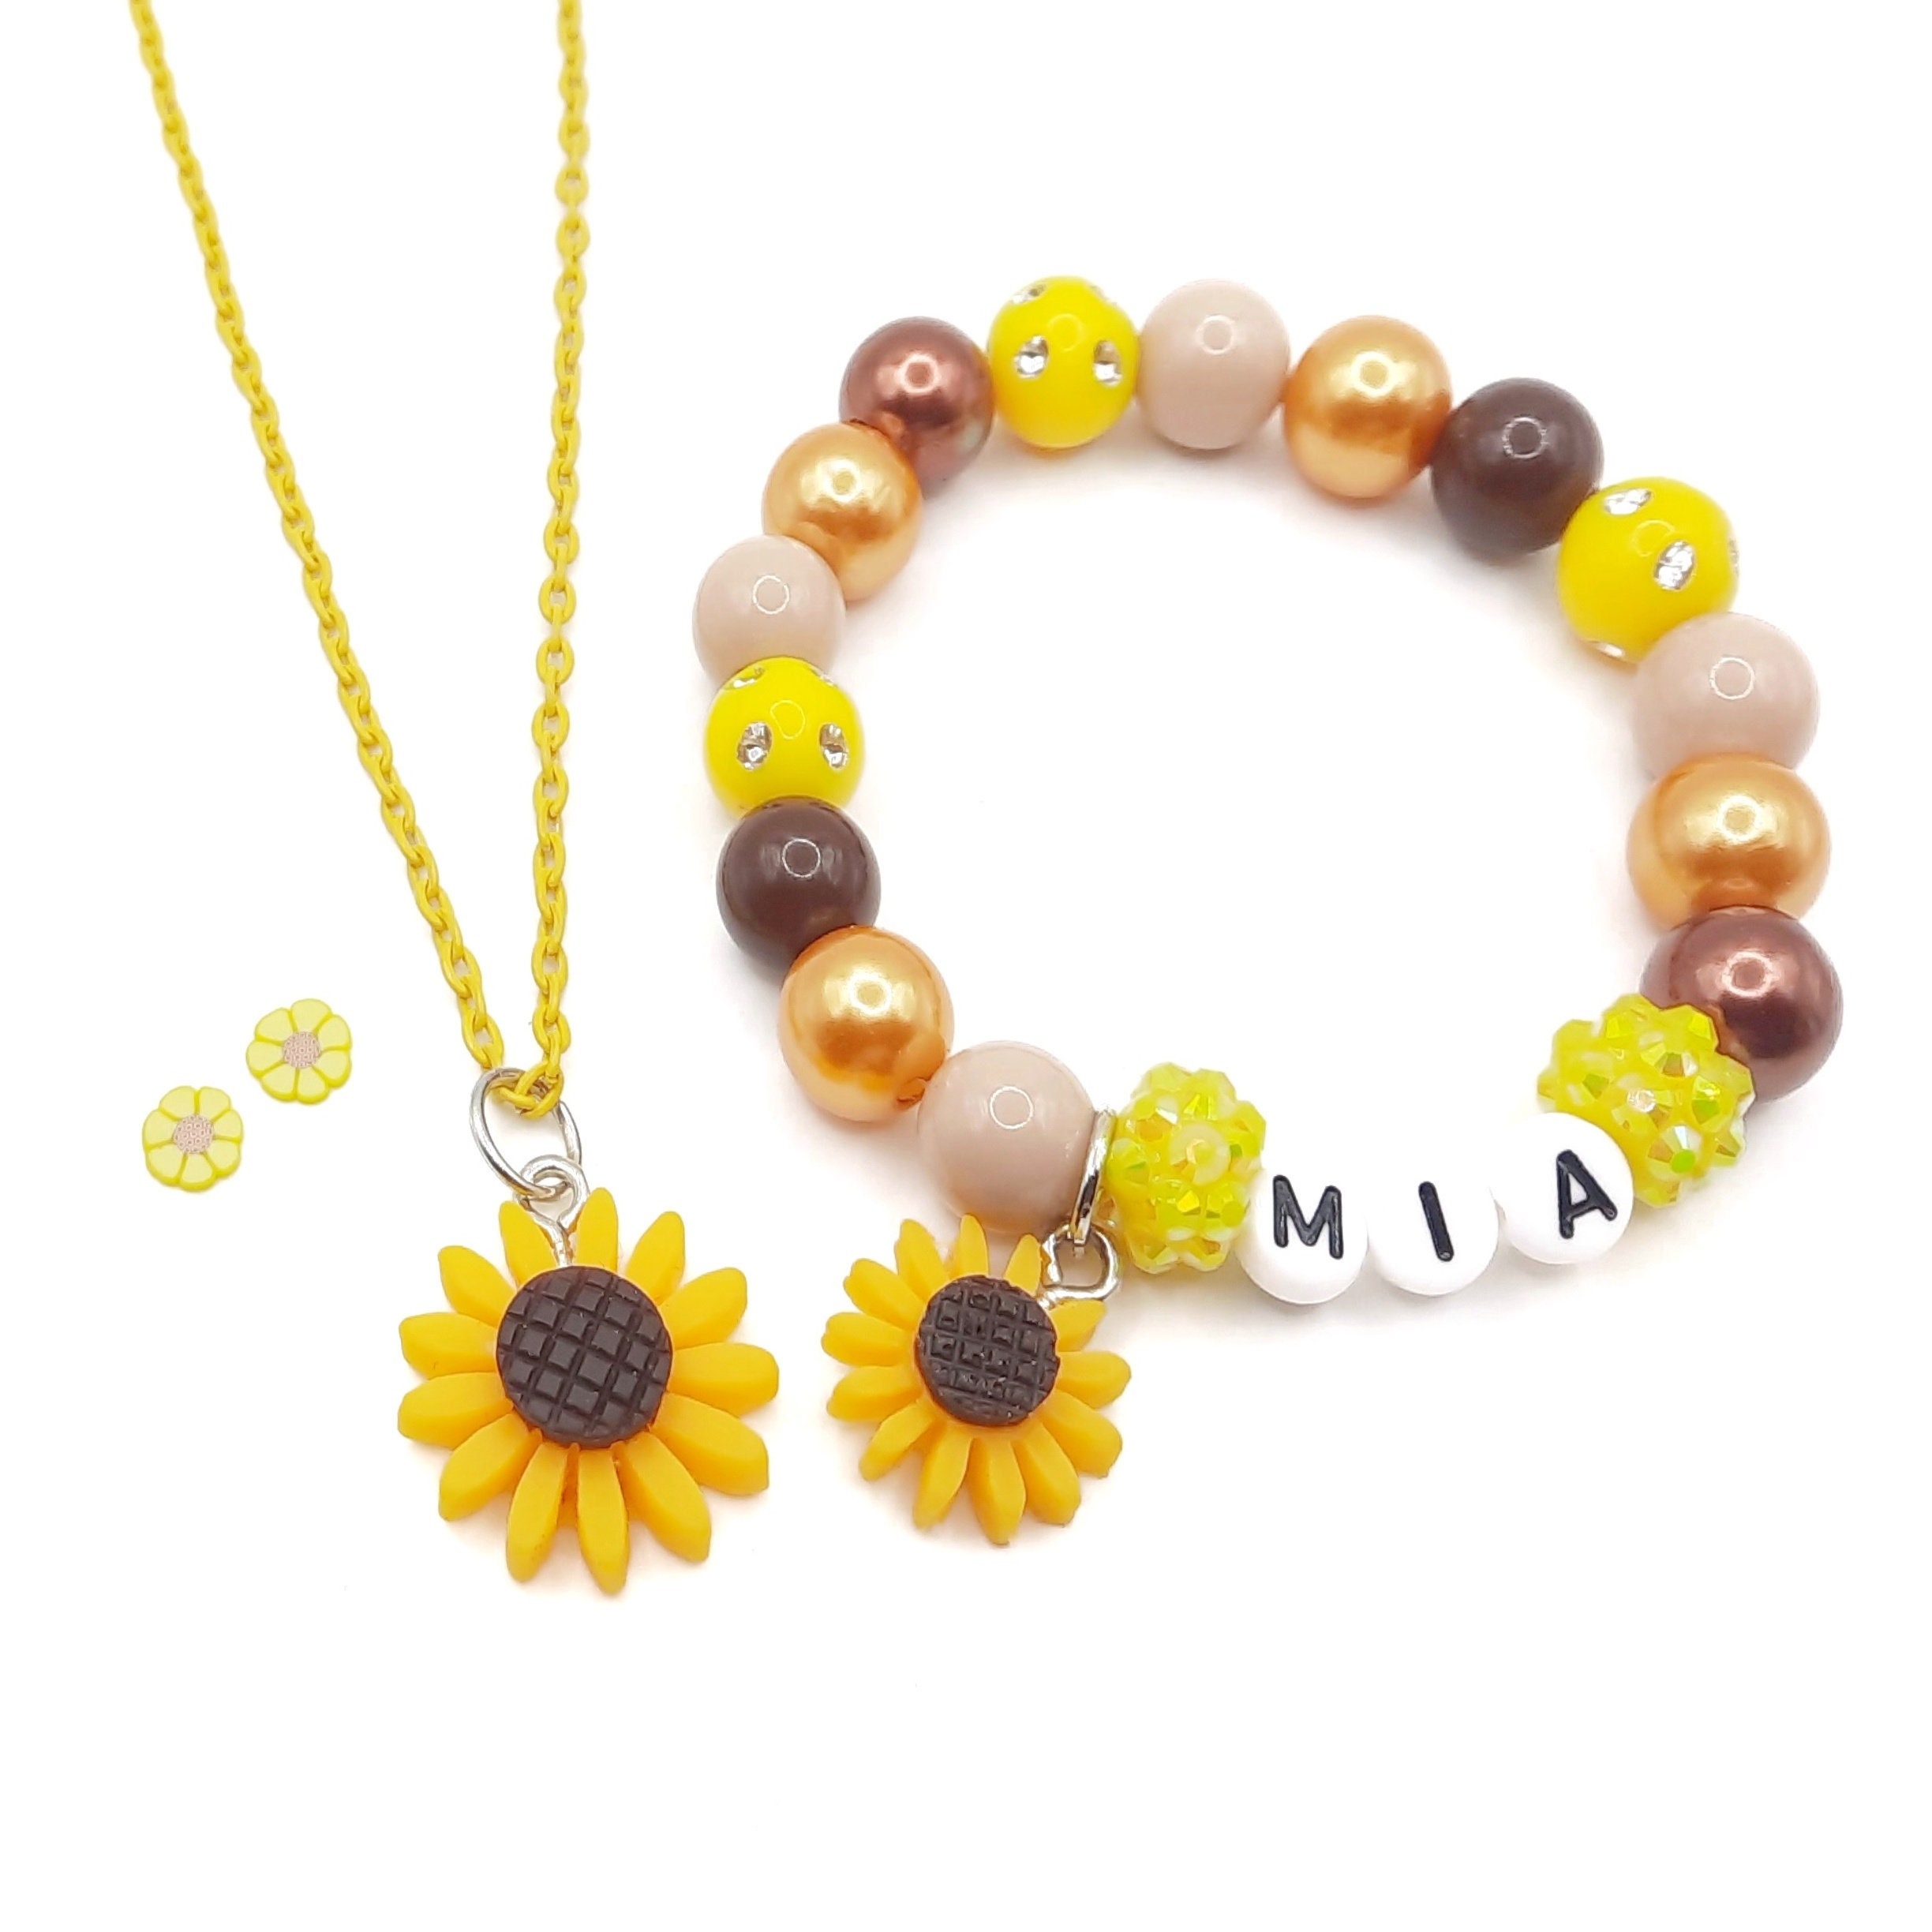 Yaomiao Jewelry Accessories Set, Include Adjustable Sunflower